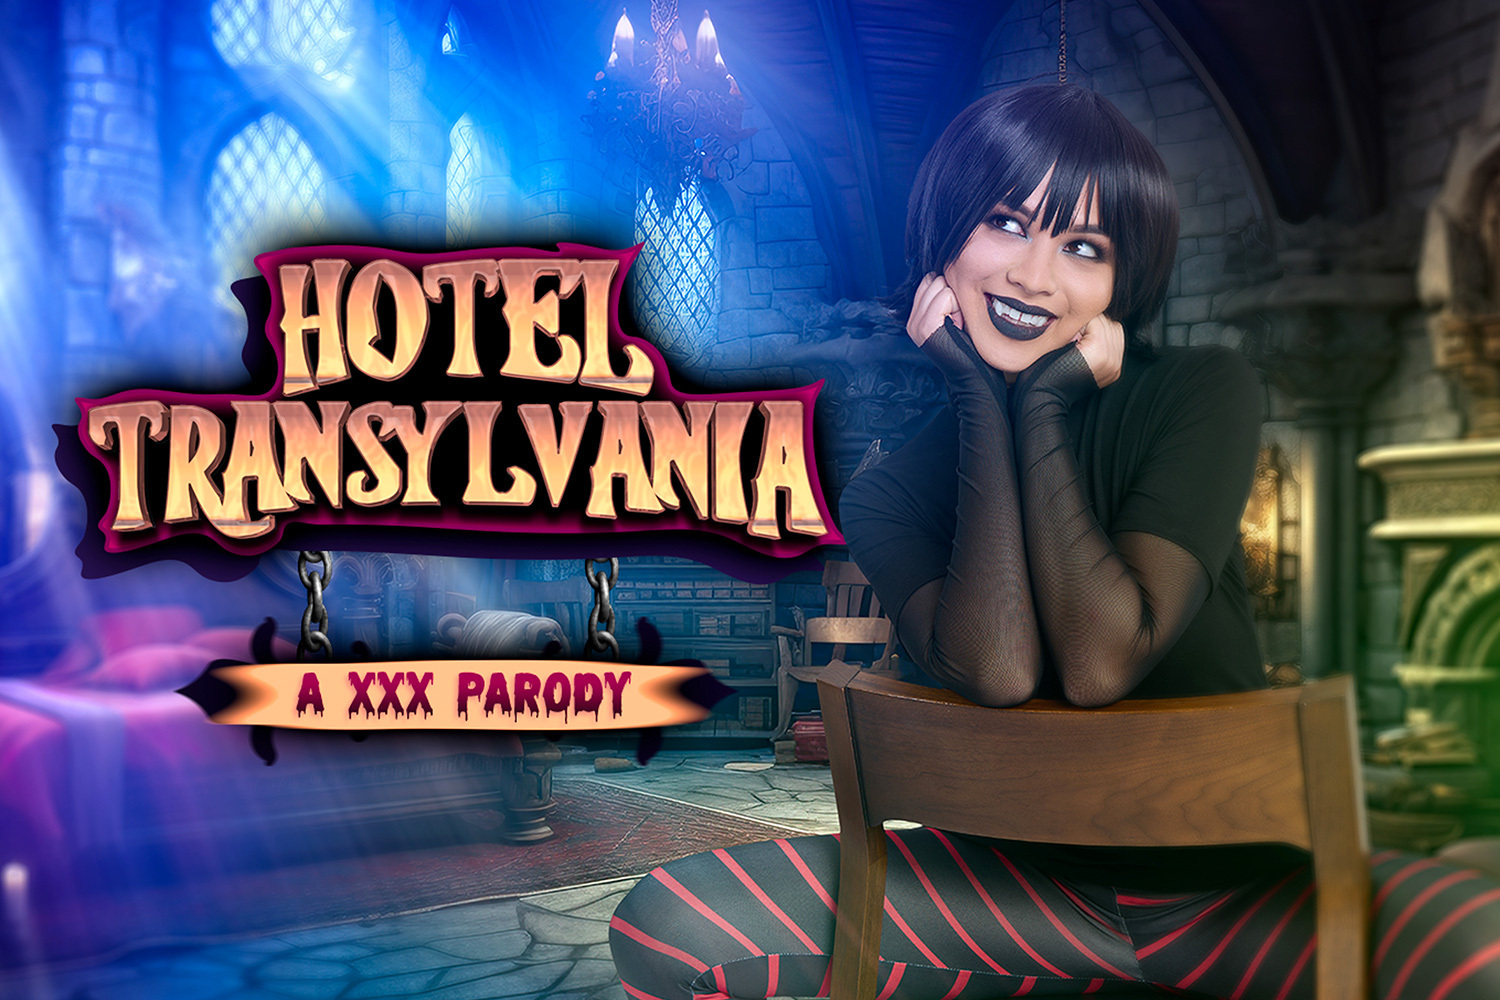 anita robison recommends Hotel Transylvania Xxx